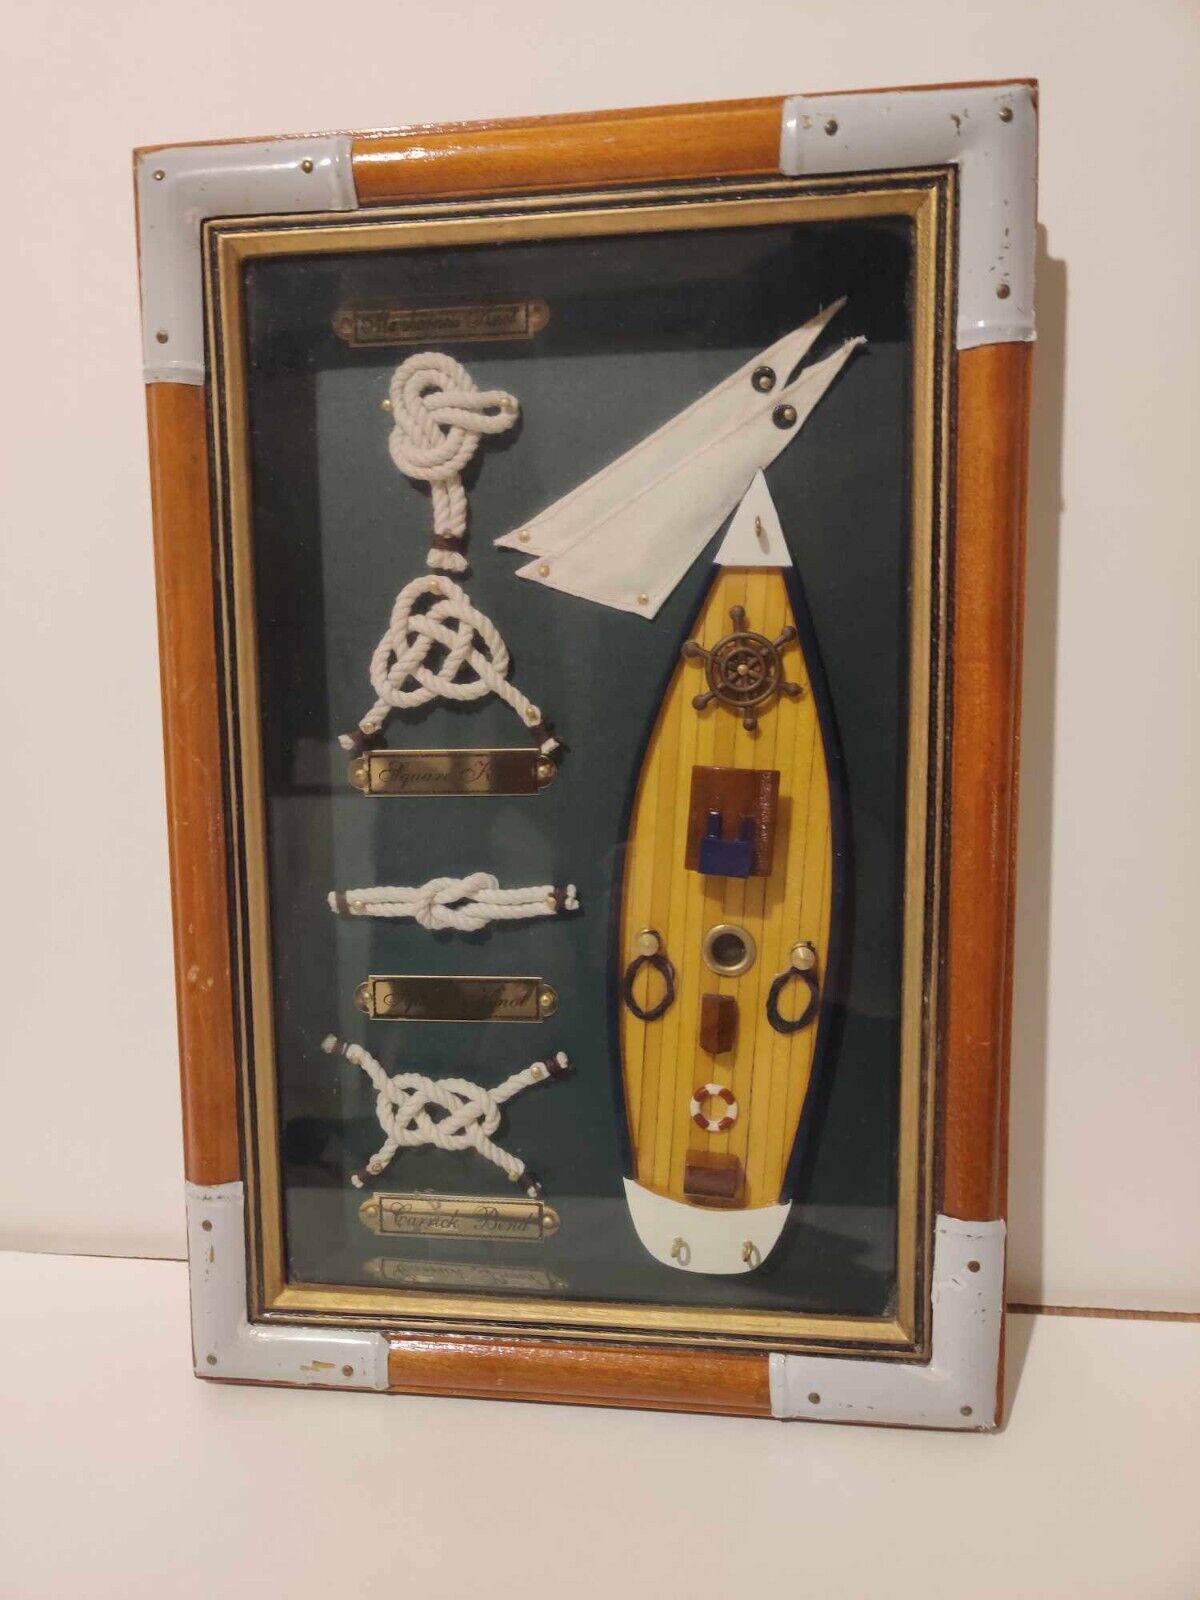 Decorative board marine knots frame 3D boat 